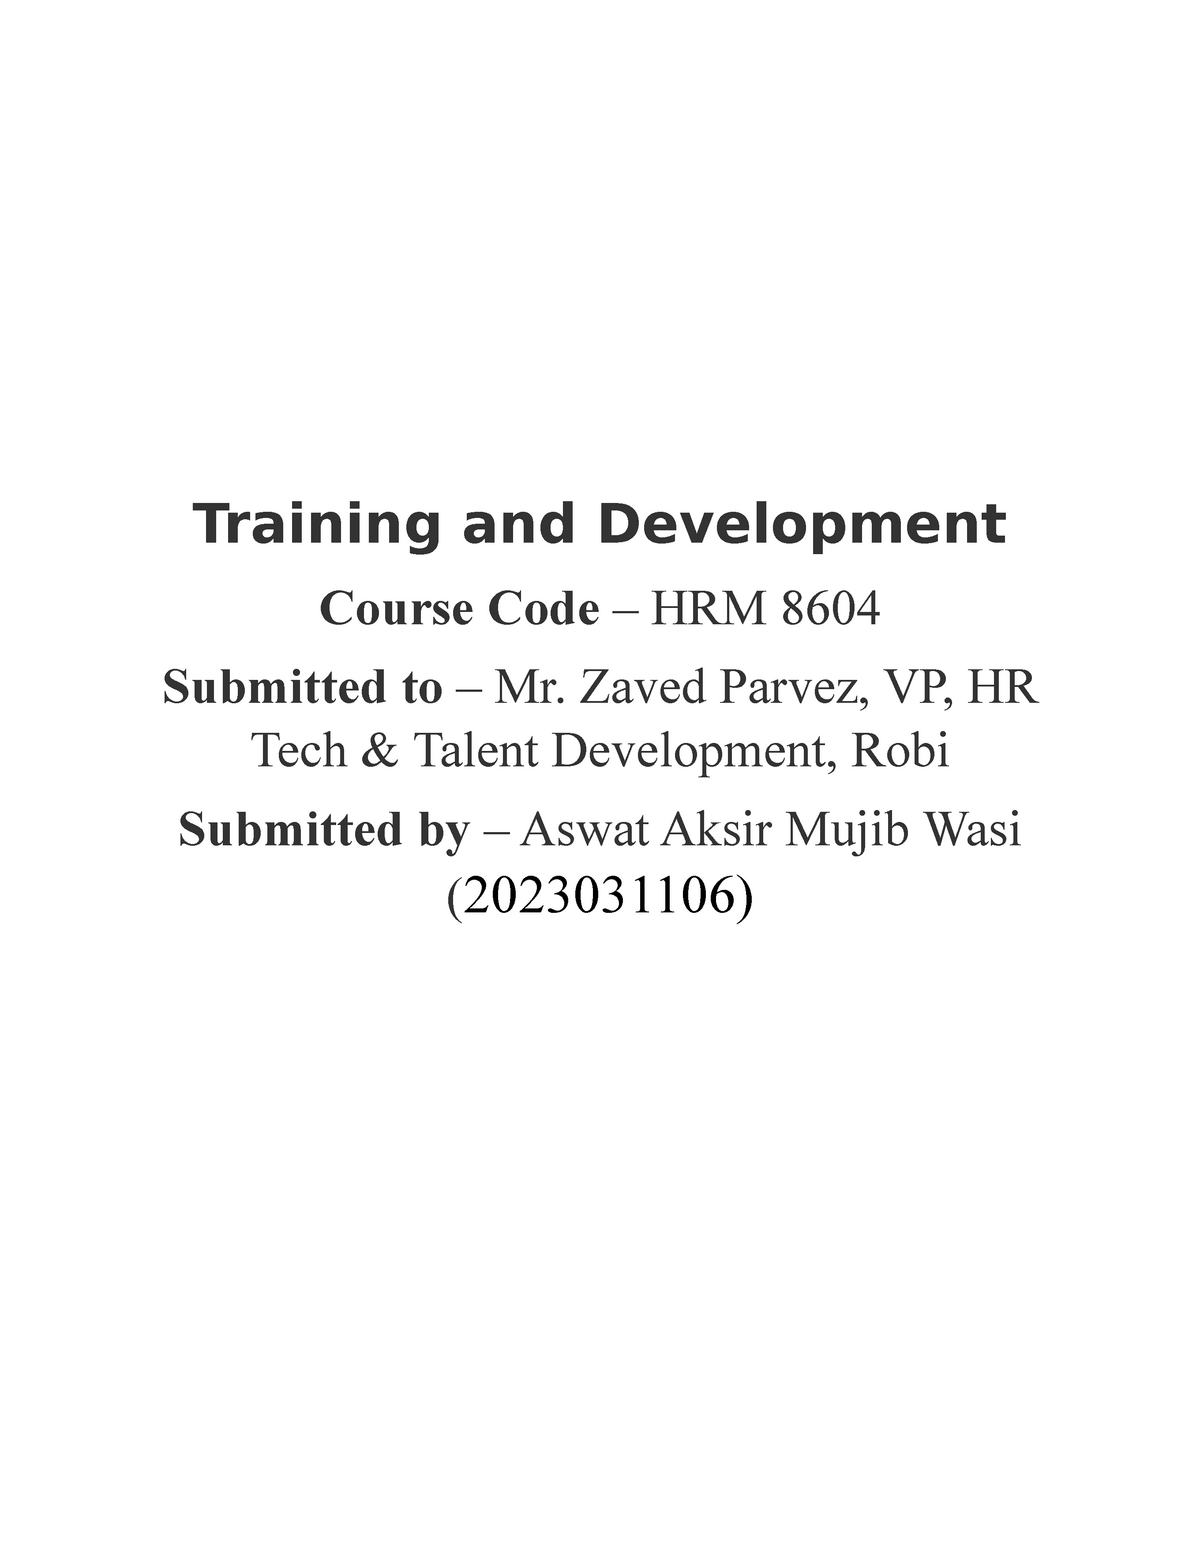 short case study on training and development